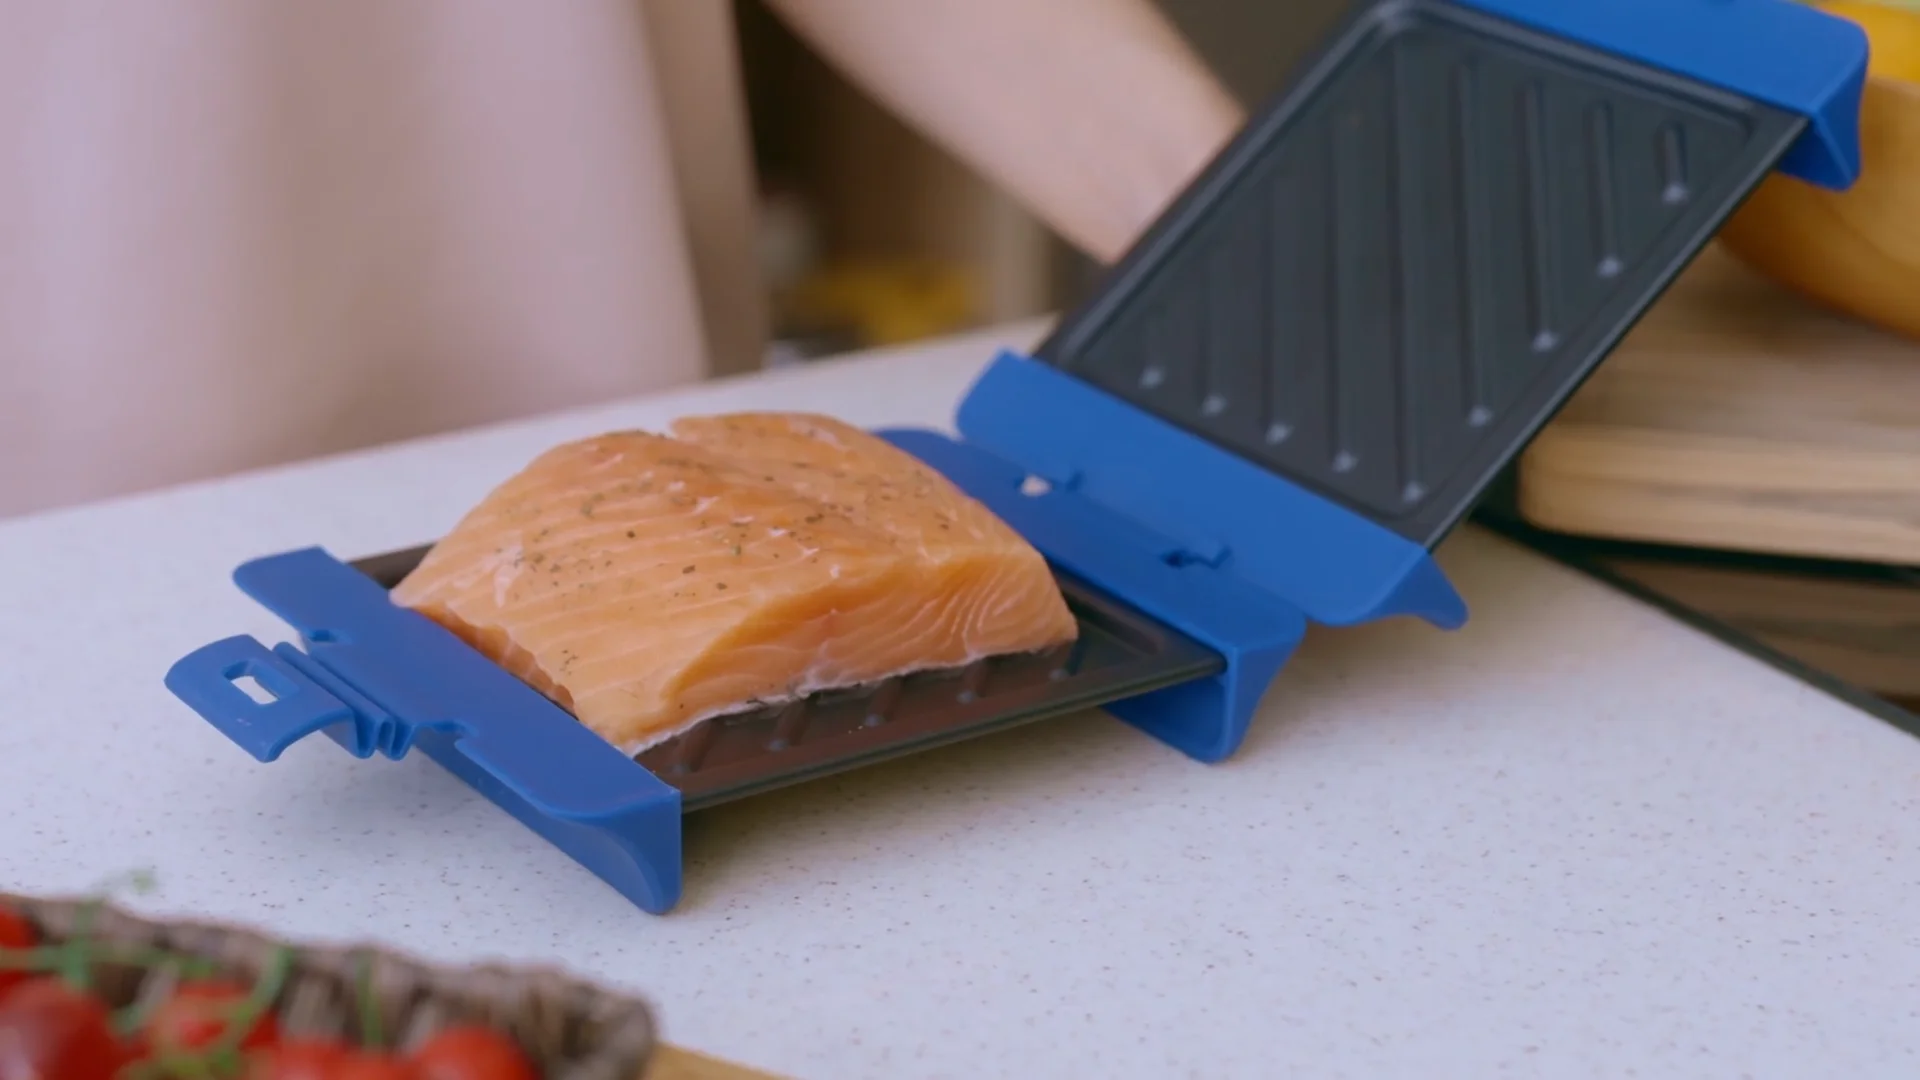  Microwave Sandwich Maker, Panini Press Sandwich Maker, Microwave  Grill Tray Crisper